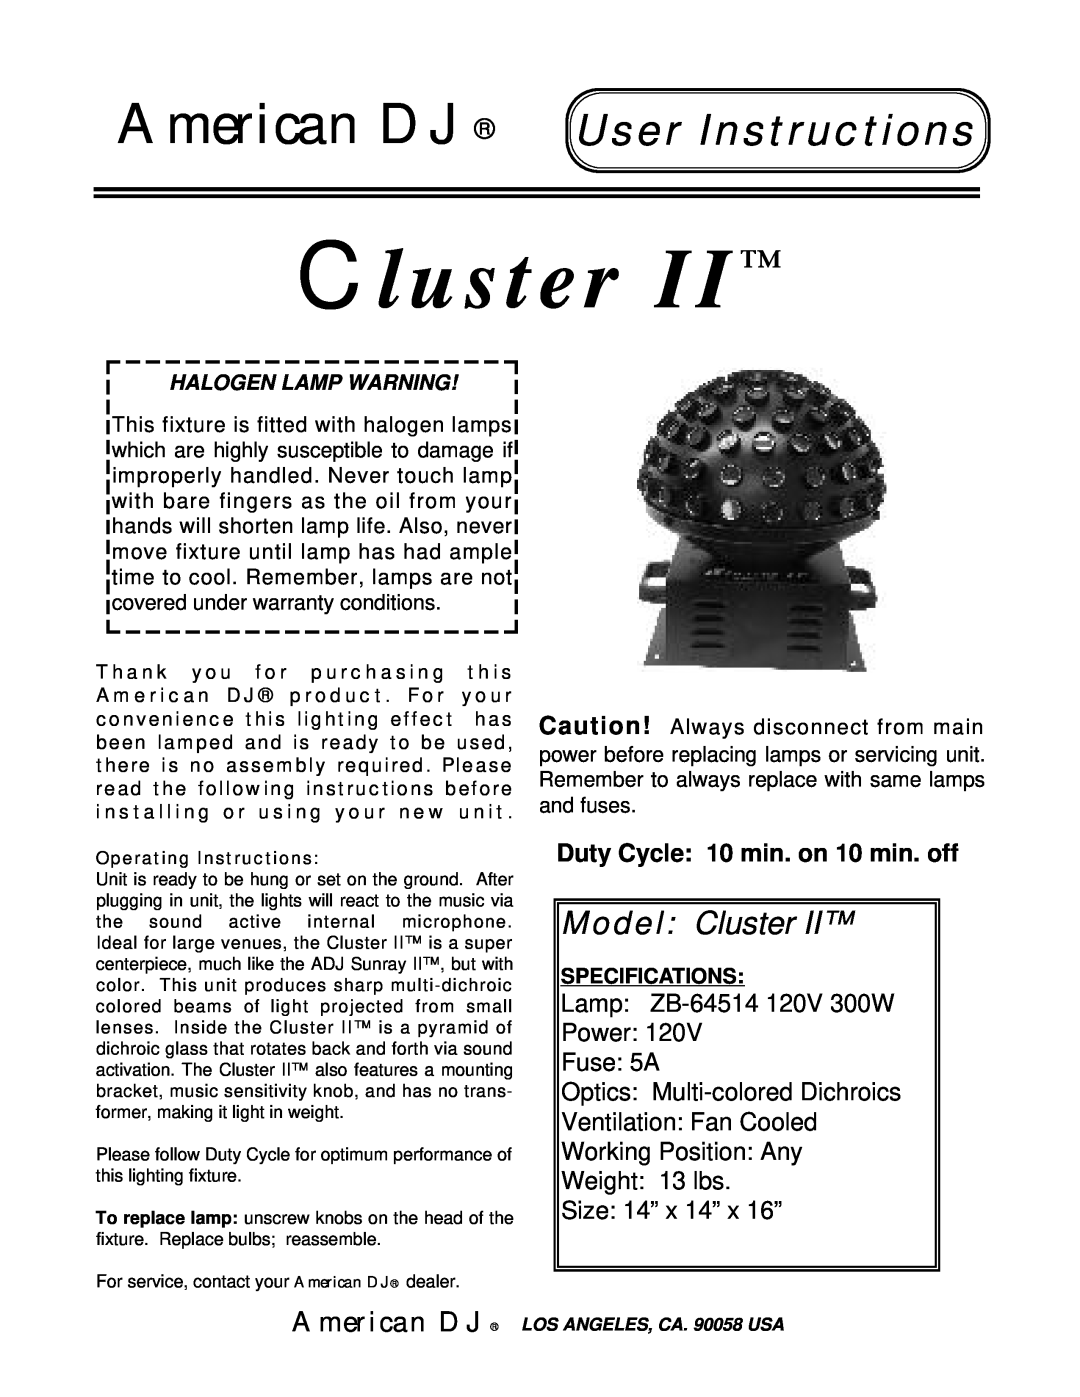 American DJ Cluster II specifications Clu st er, American DJ User Instructions, Model Cluster, Halogen Lamp Warning 